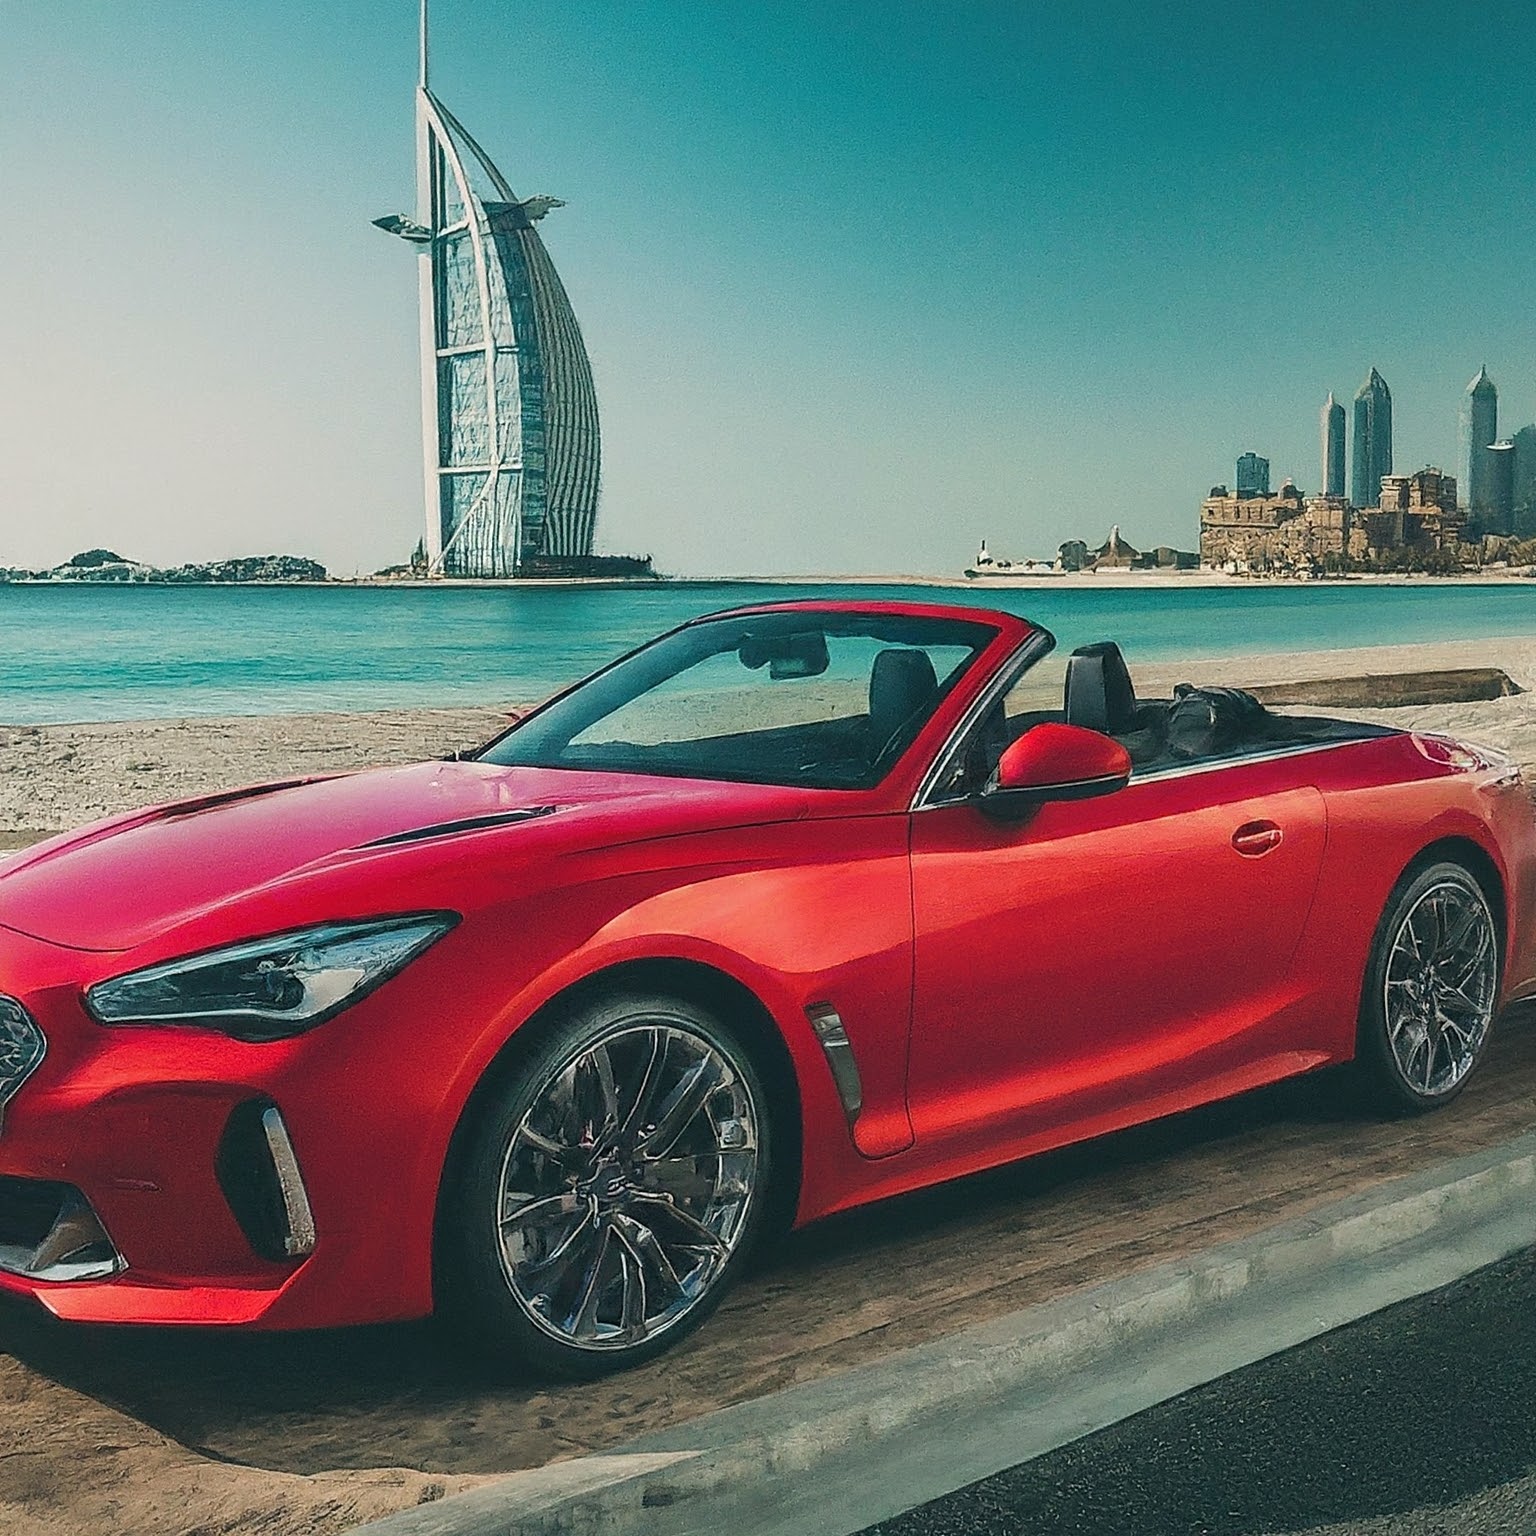 Rent a Car Dubai and Embrace the Remote Work Revolution